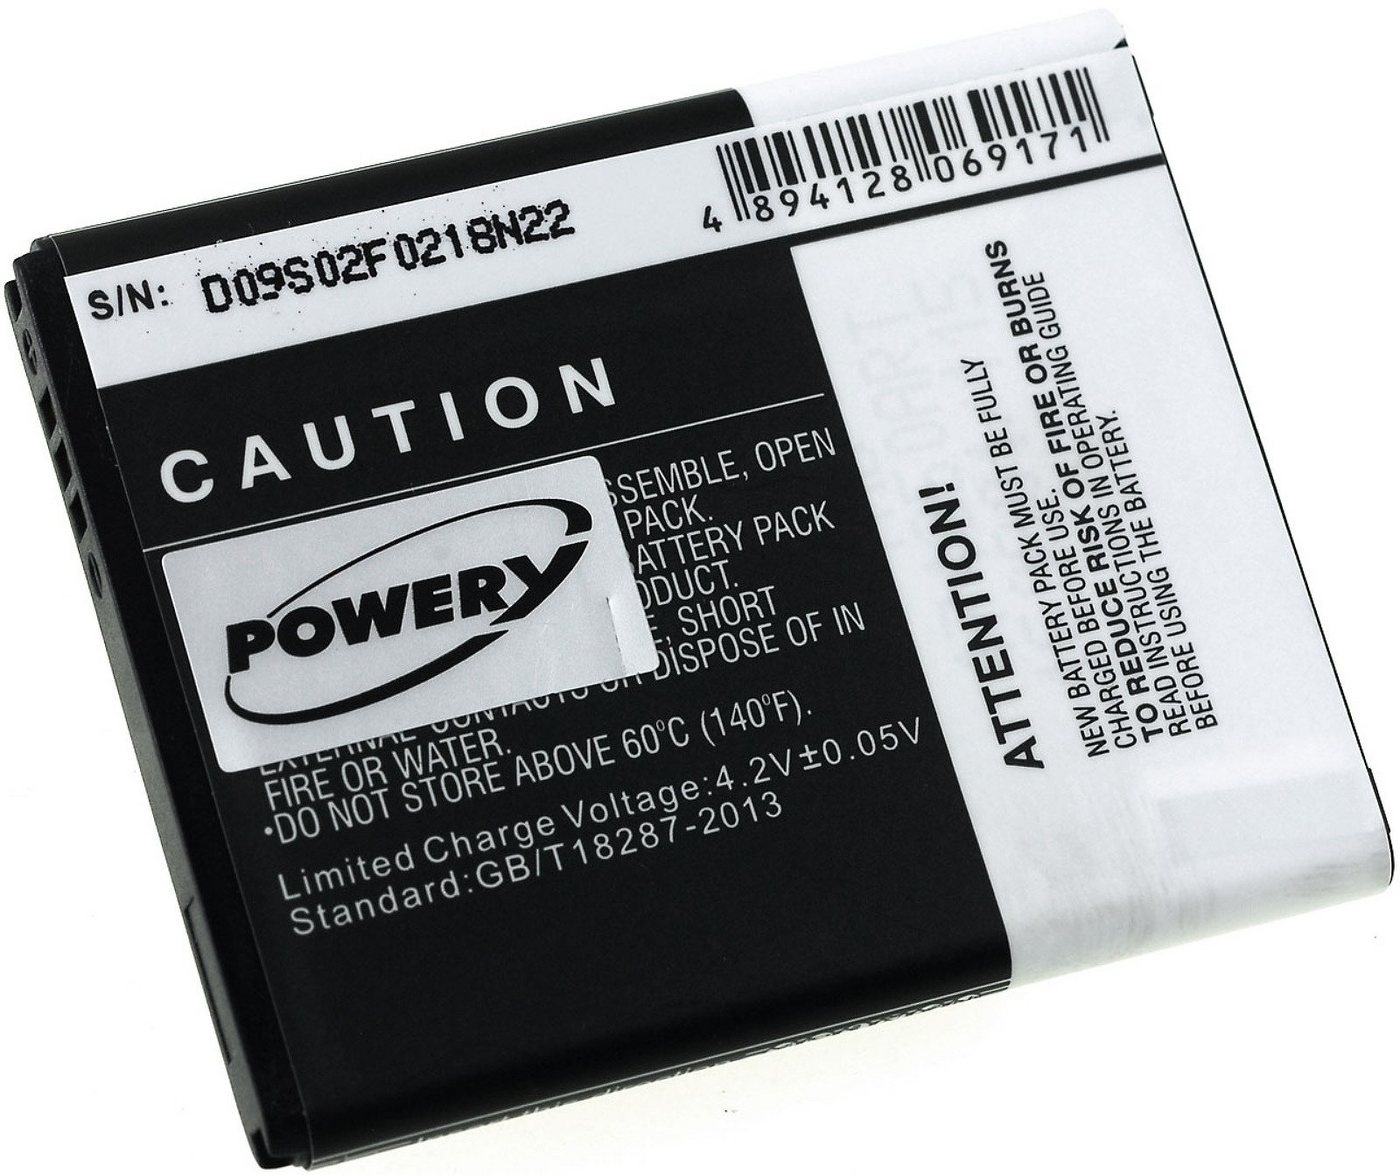 Powery Powerakku für Smartphone Samsung GT-S5280 Smartphone-Akku 1300 mAh (3.7 V) schwarz